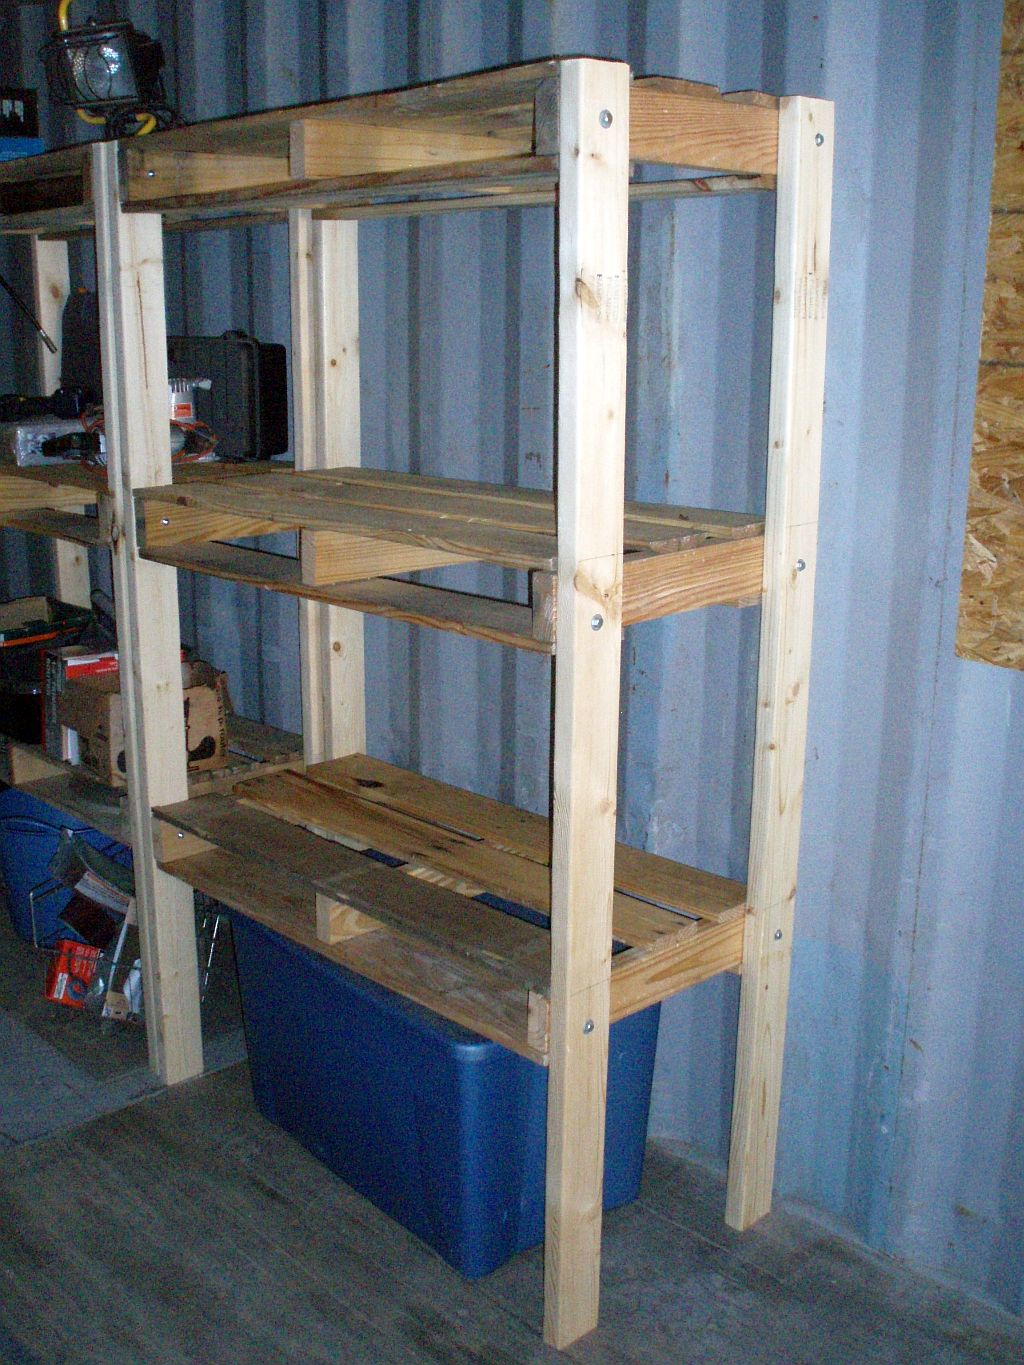 finished, I've started a chicken coop made of wood pallets. We plan 